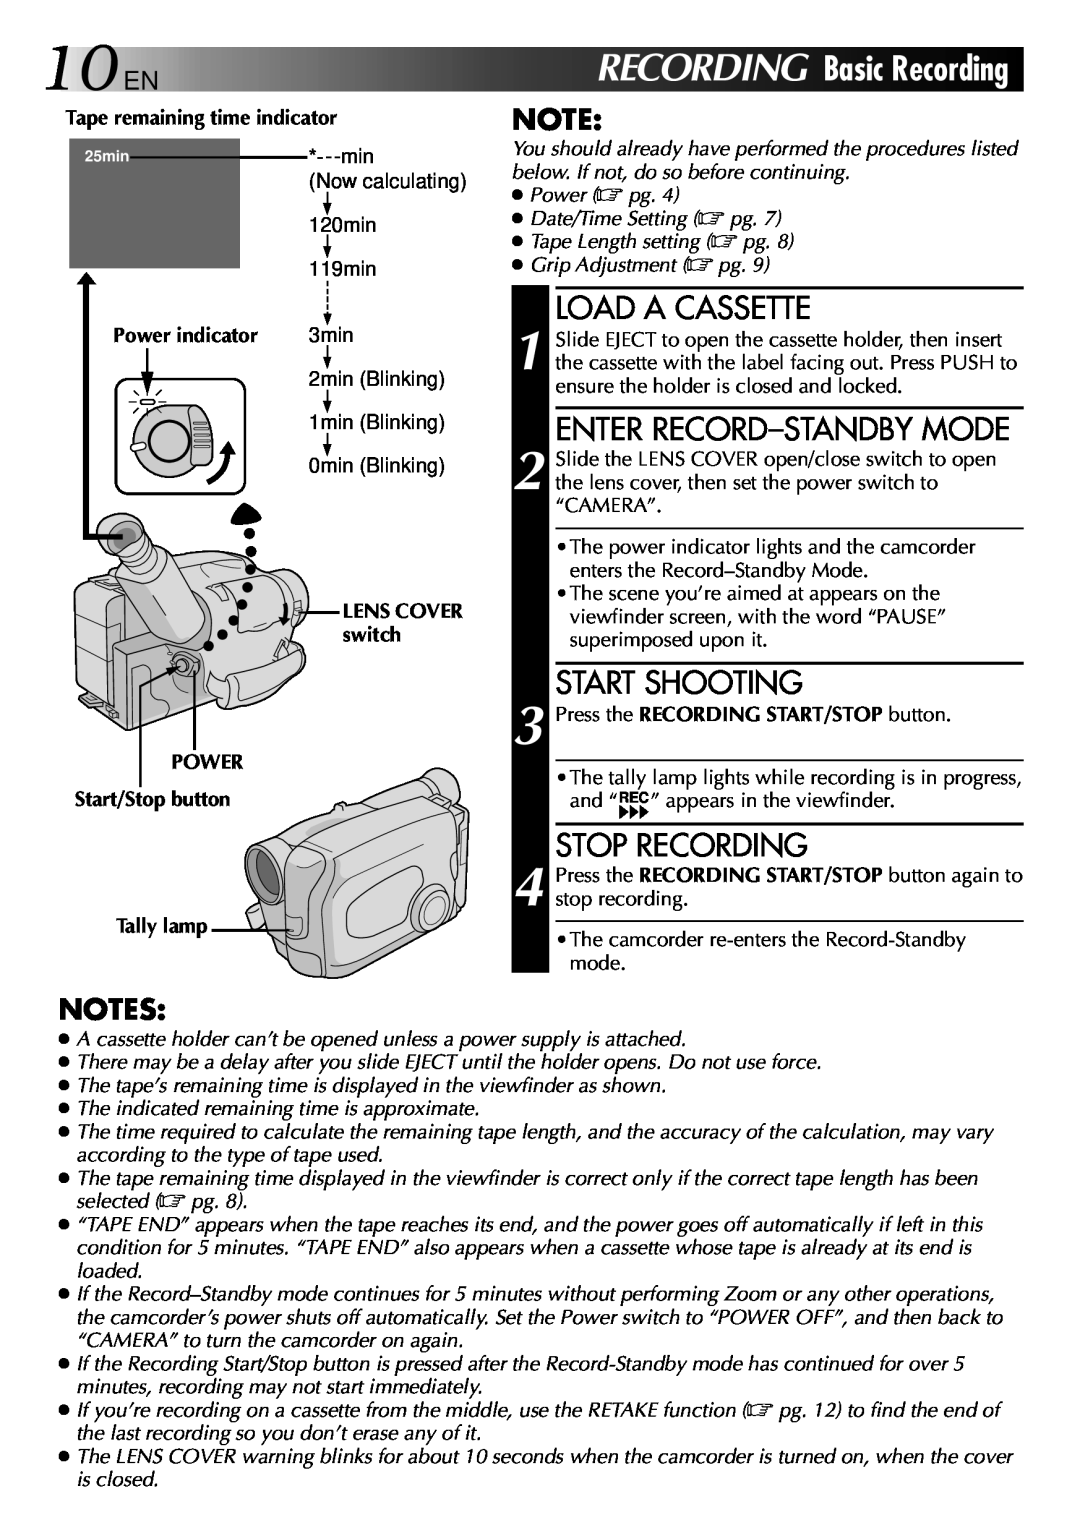 JVC LYT0002-082A manual 10EN RECORDING Basic Recording, Load A Cassette, Enter Record-Standby Mode, Start Shooting 